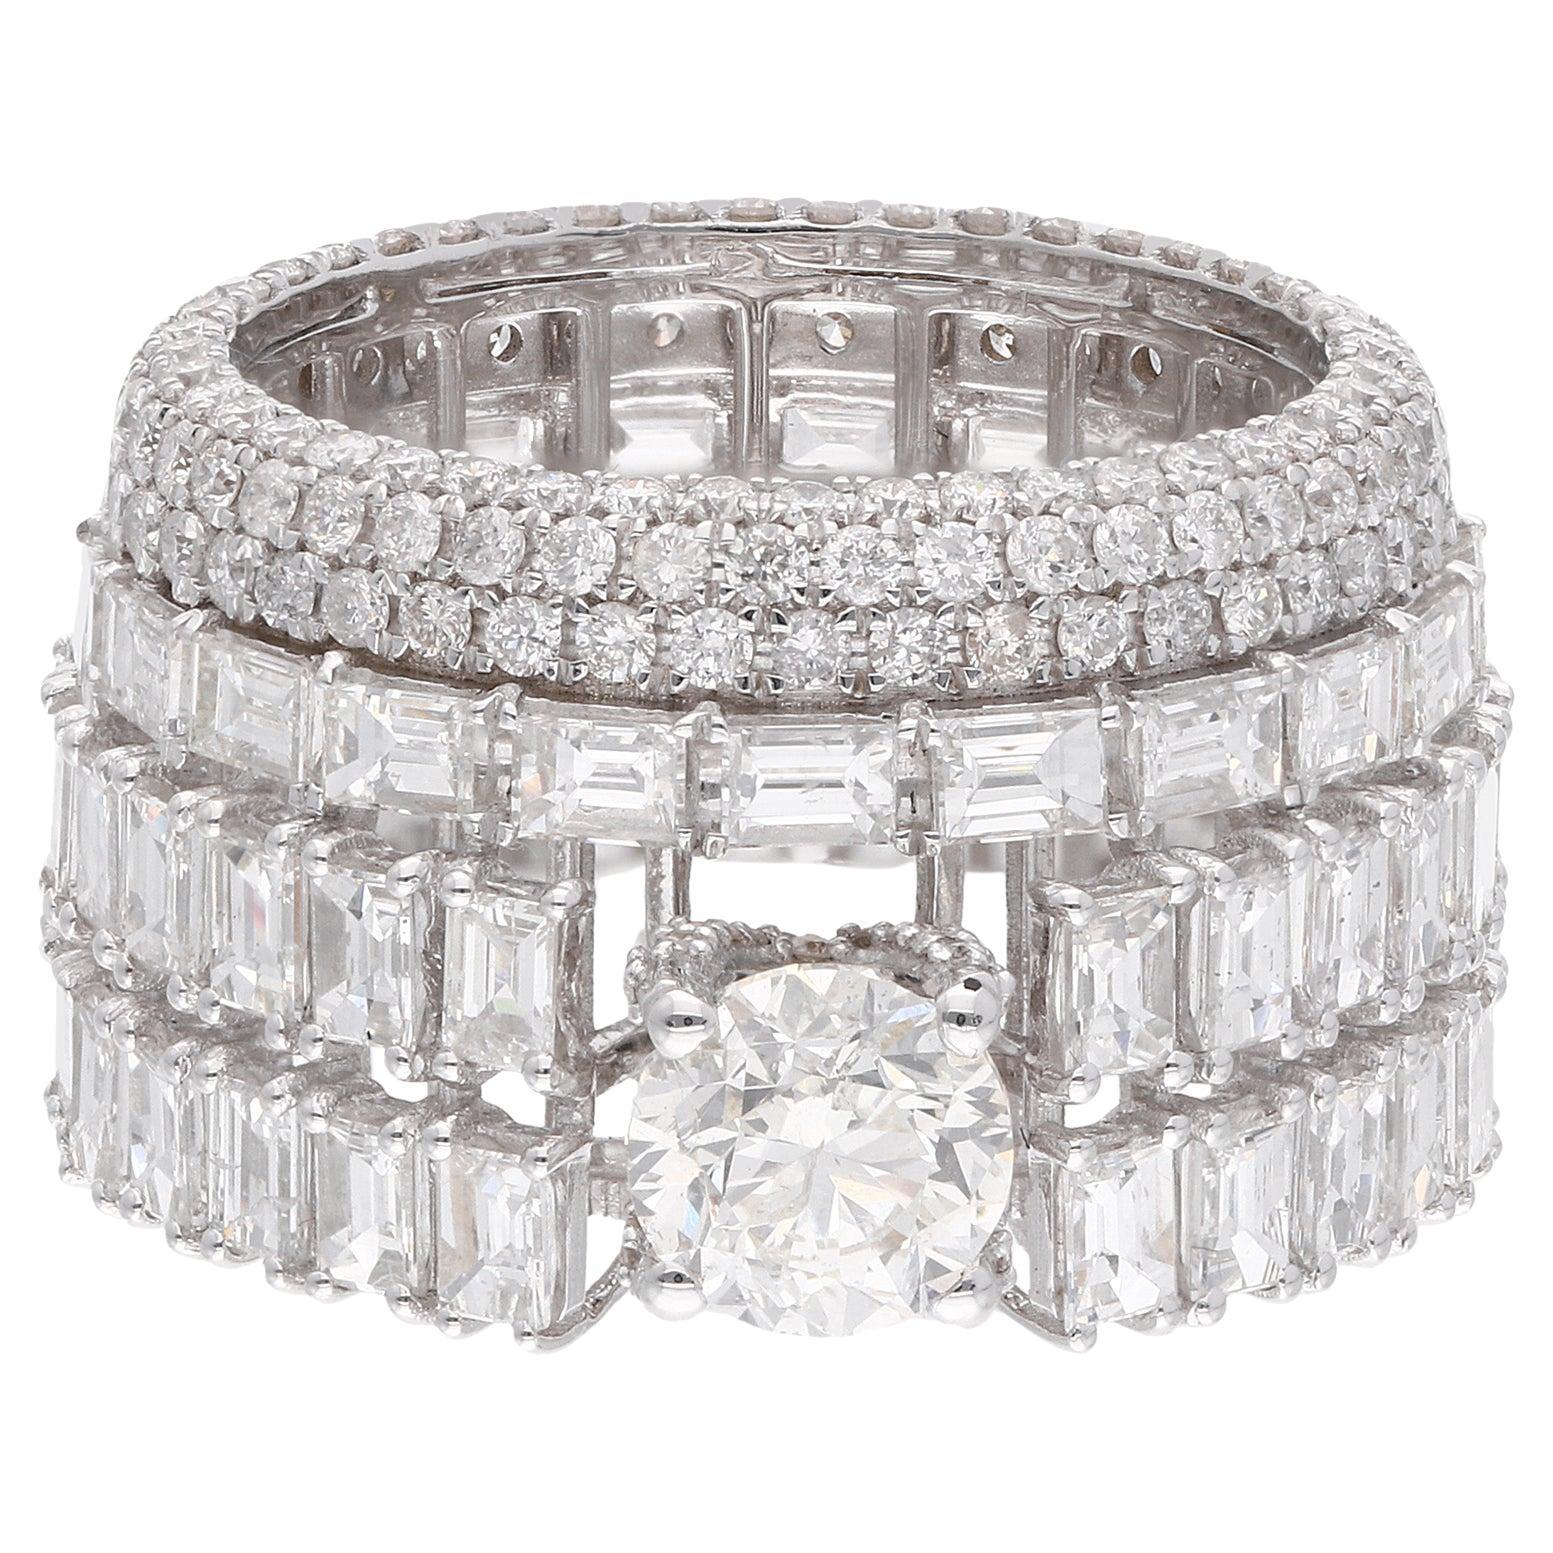 7.3 Carat SI Clarity HI Color Round Emerald Cut Diamond Ring 18 Karat White Gold